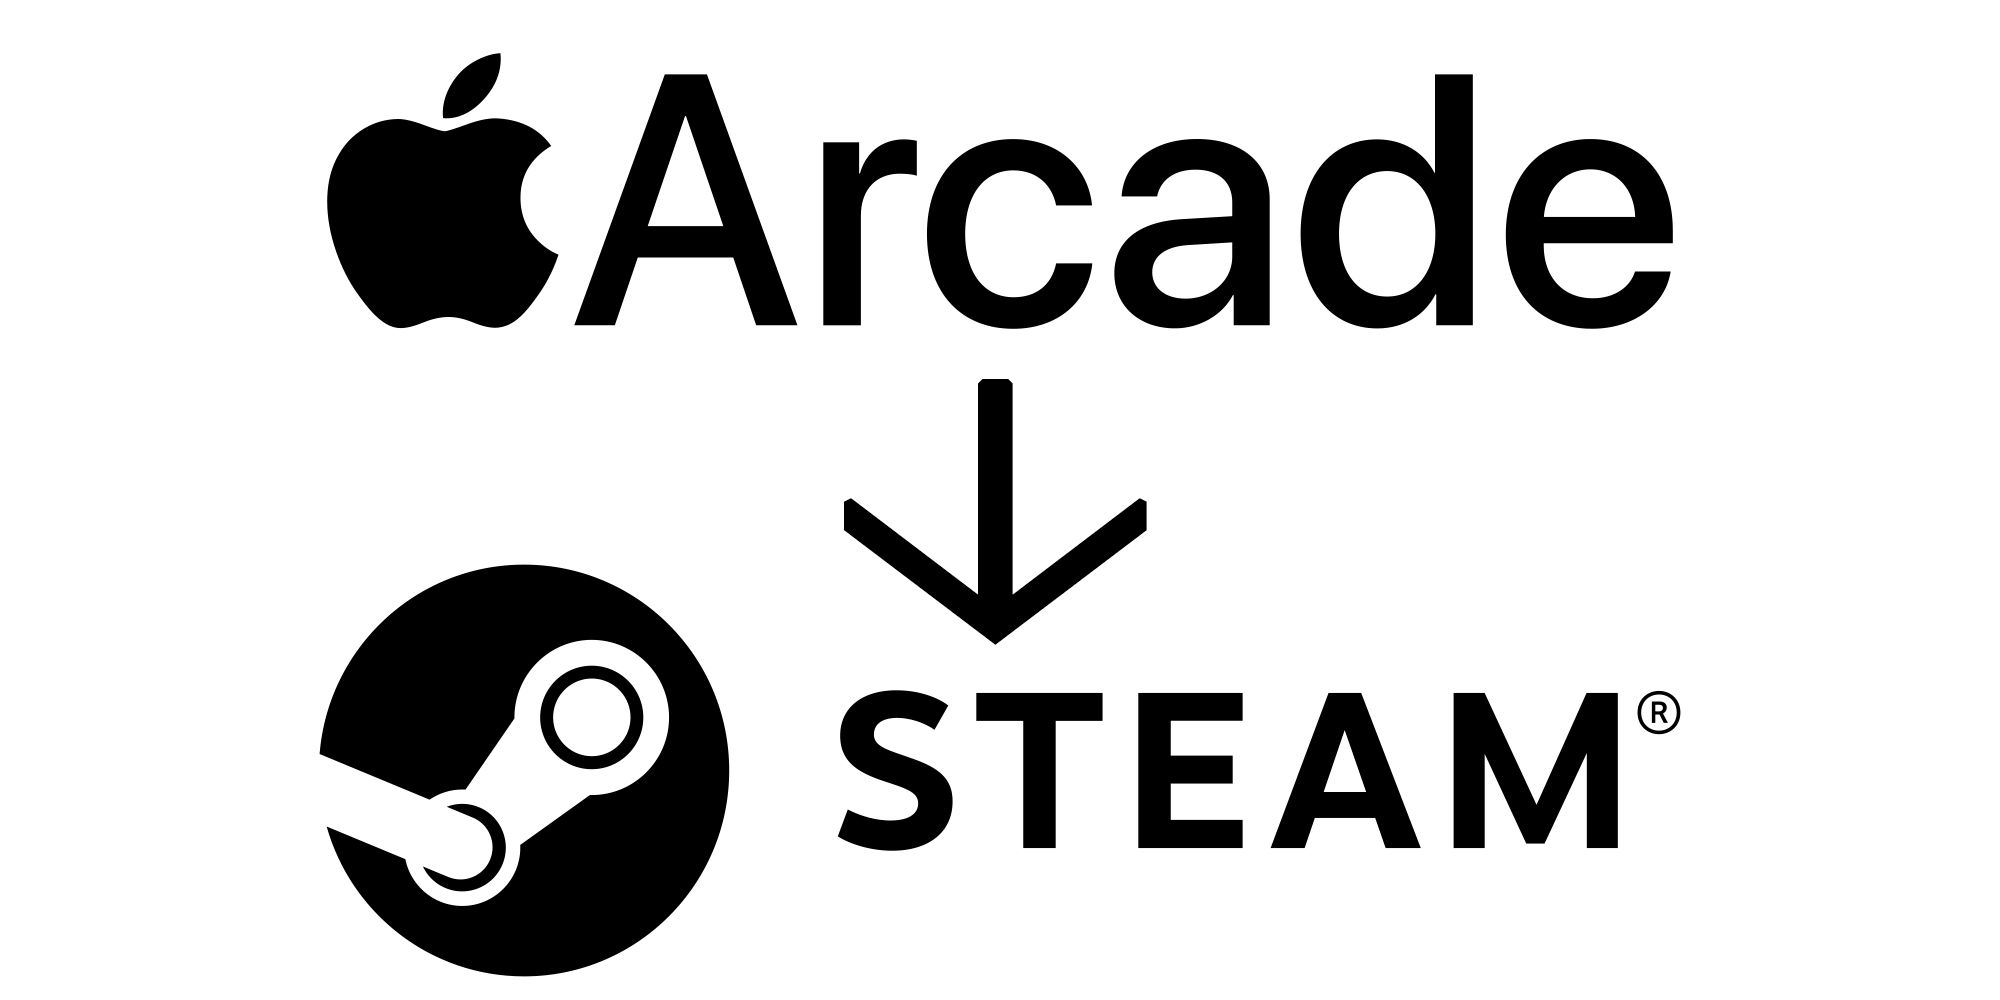 Apple Arcade to Steam logos arrow transition